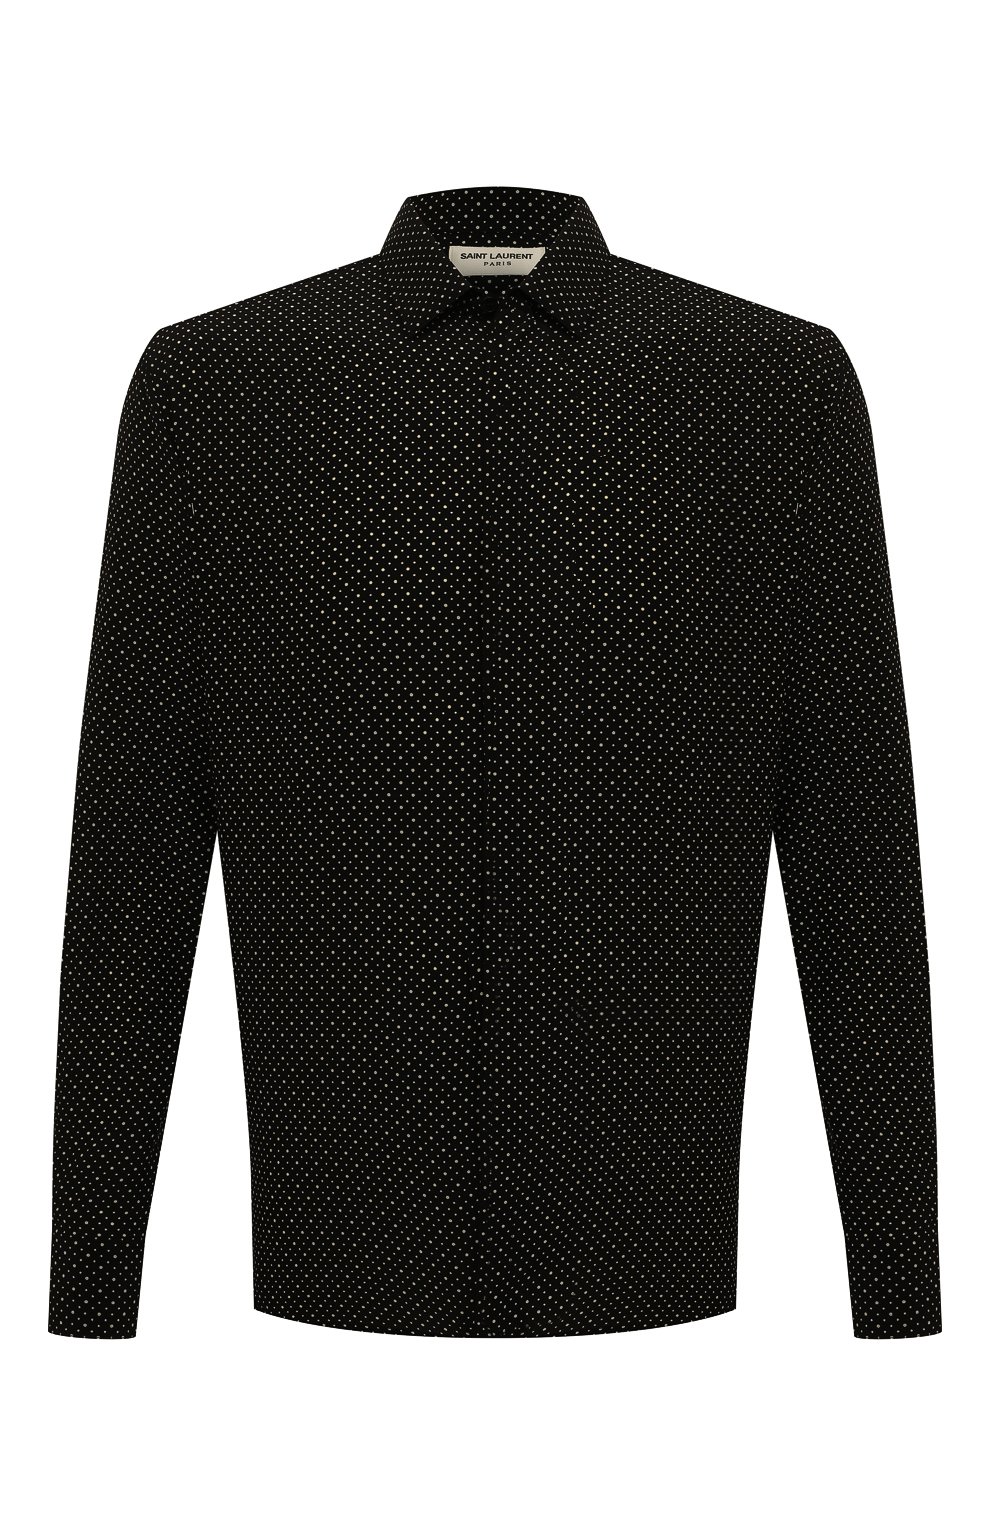 Рубашки Saint Laurent, Шелковая рубашка Saint Laurent, Италия, Чёрный, Шелк: 100%;, 12652290  - купить